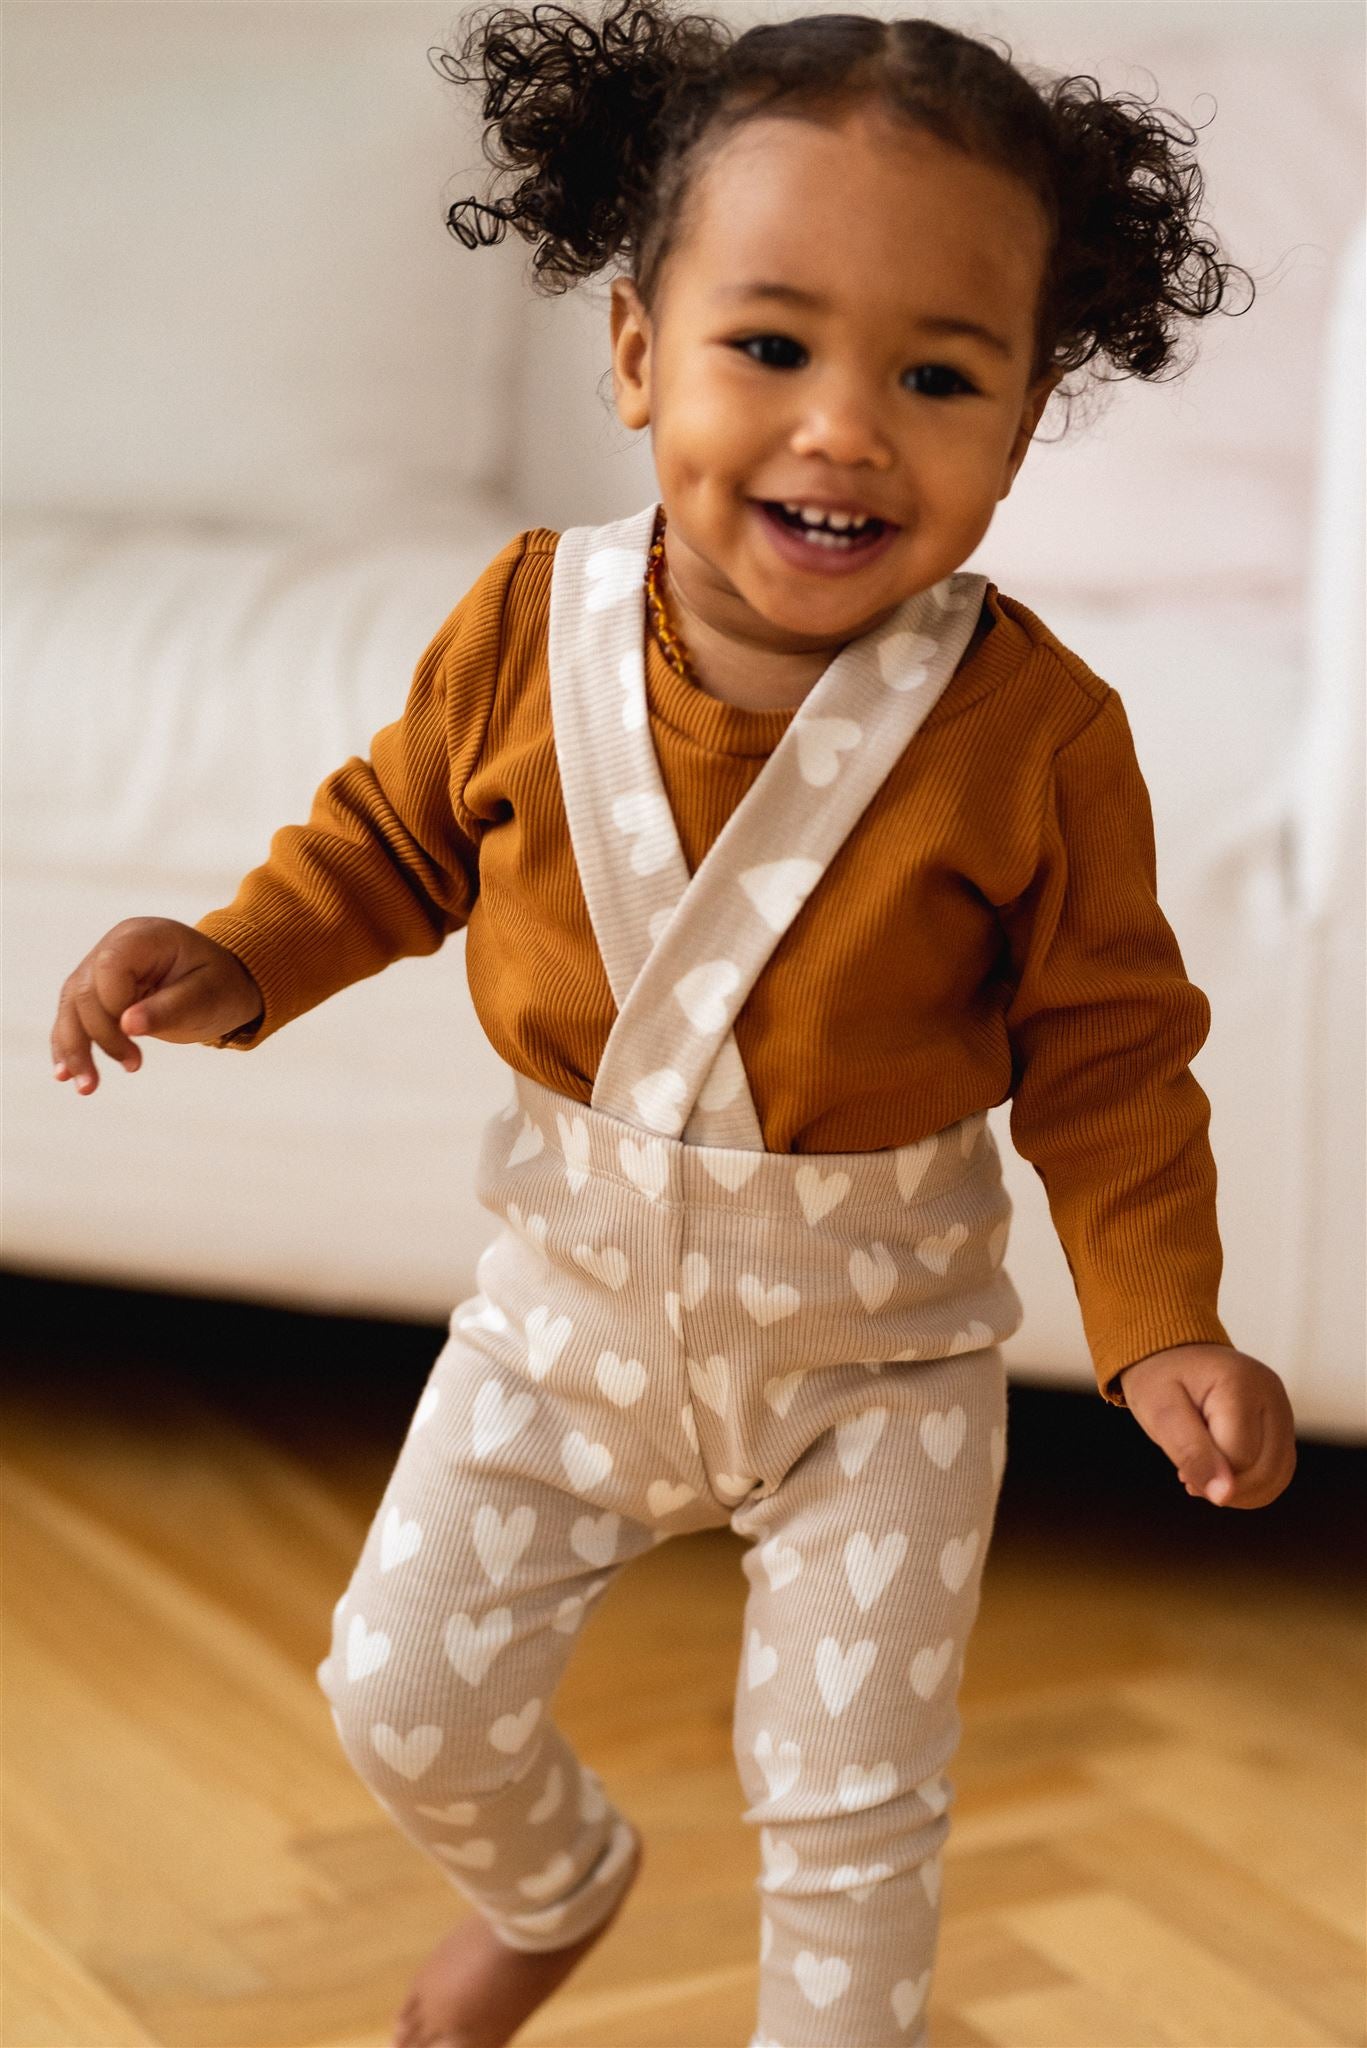 Toddler Kids Baby Girls Child Short Pants Leggings Stretchy Safety Shorts  Pants… | eBay